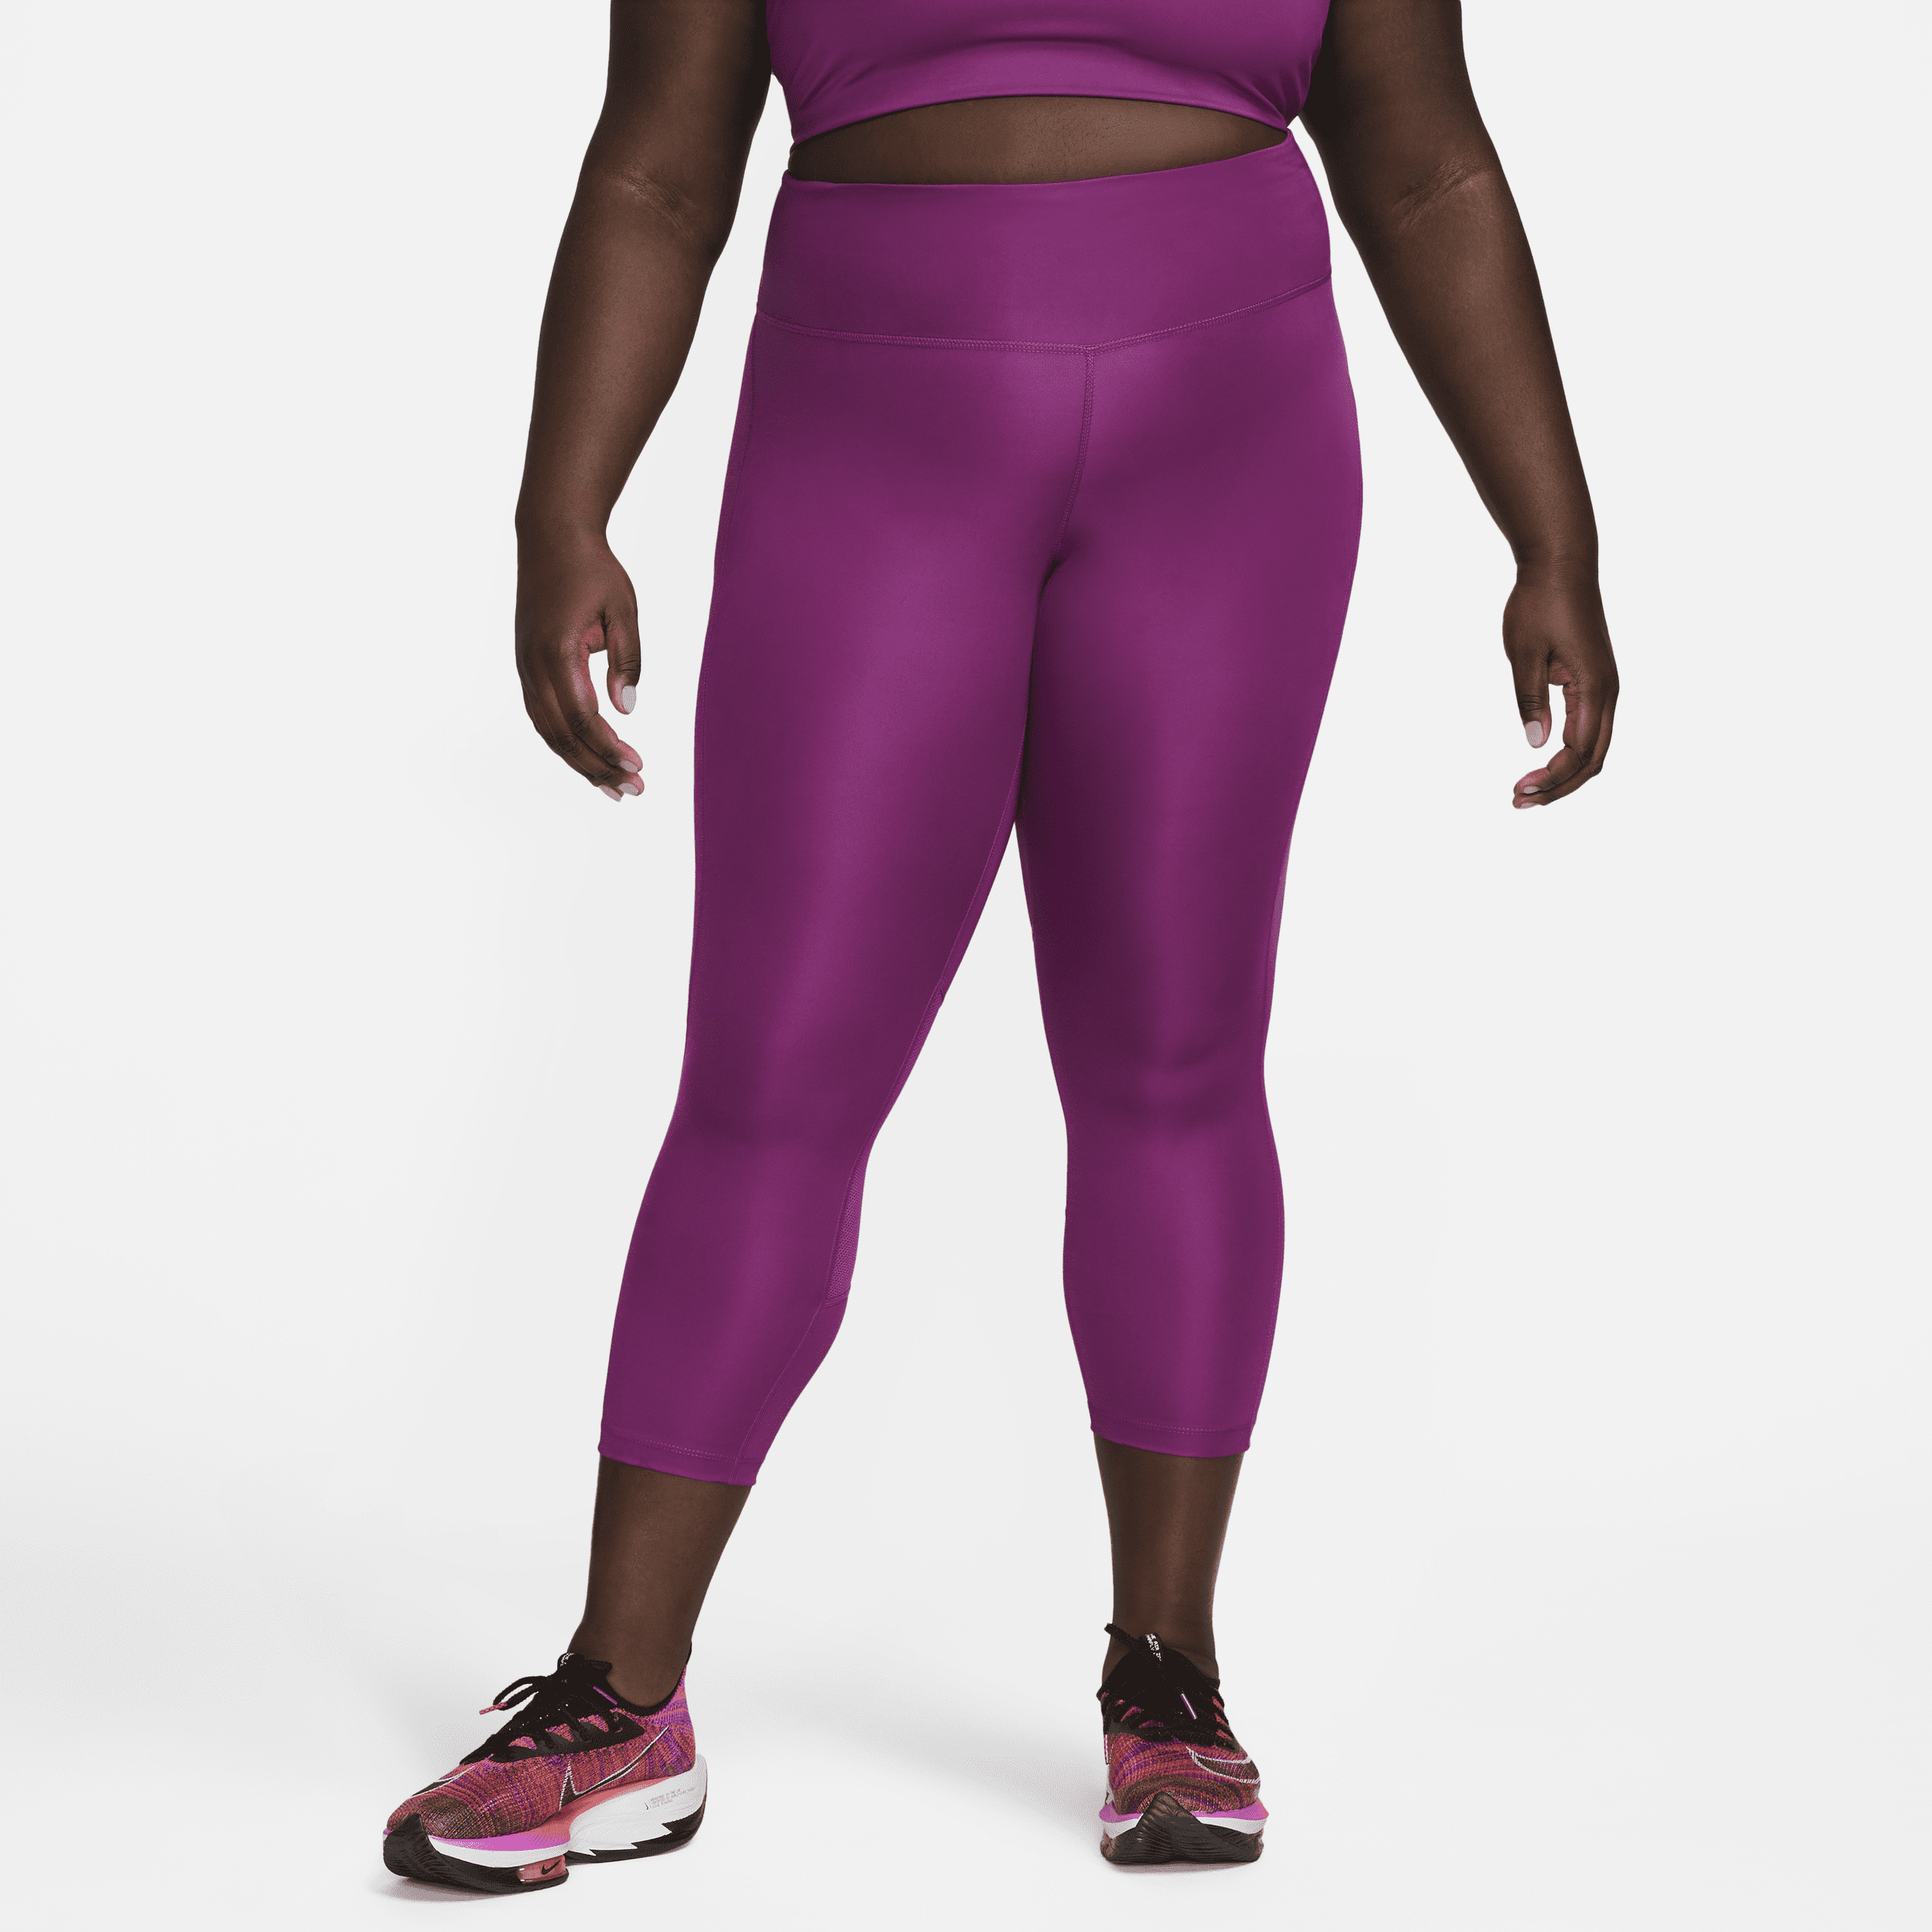 Damskie legginsy do biegania o skróconym kroju ze średnim stanem Nike Fast (duże rozmiary) - Fiolet